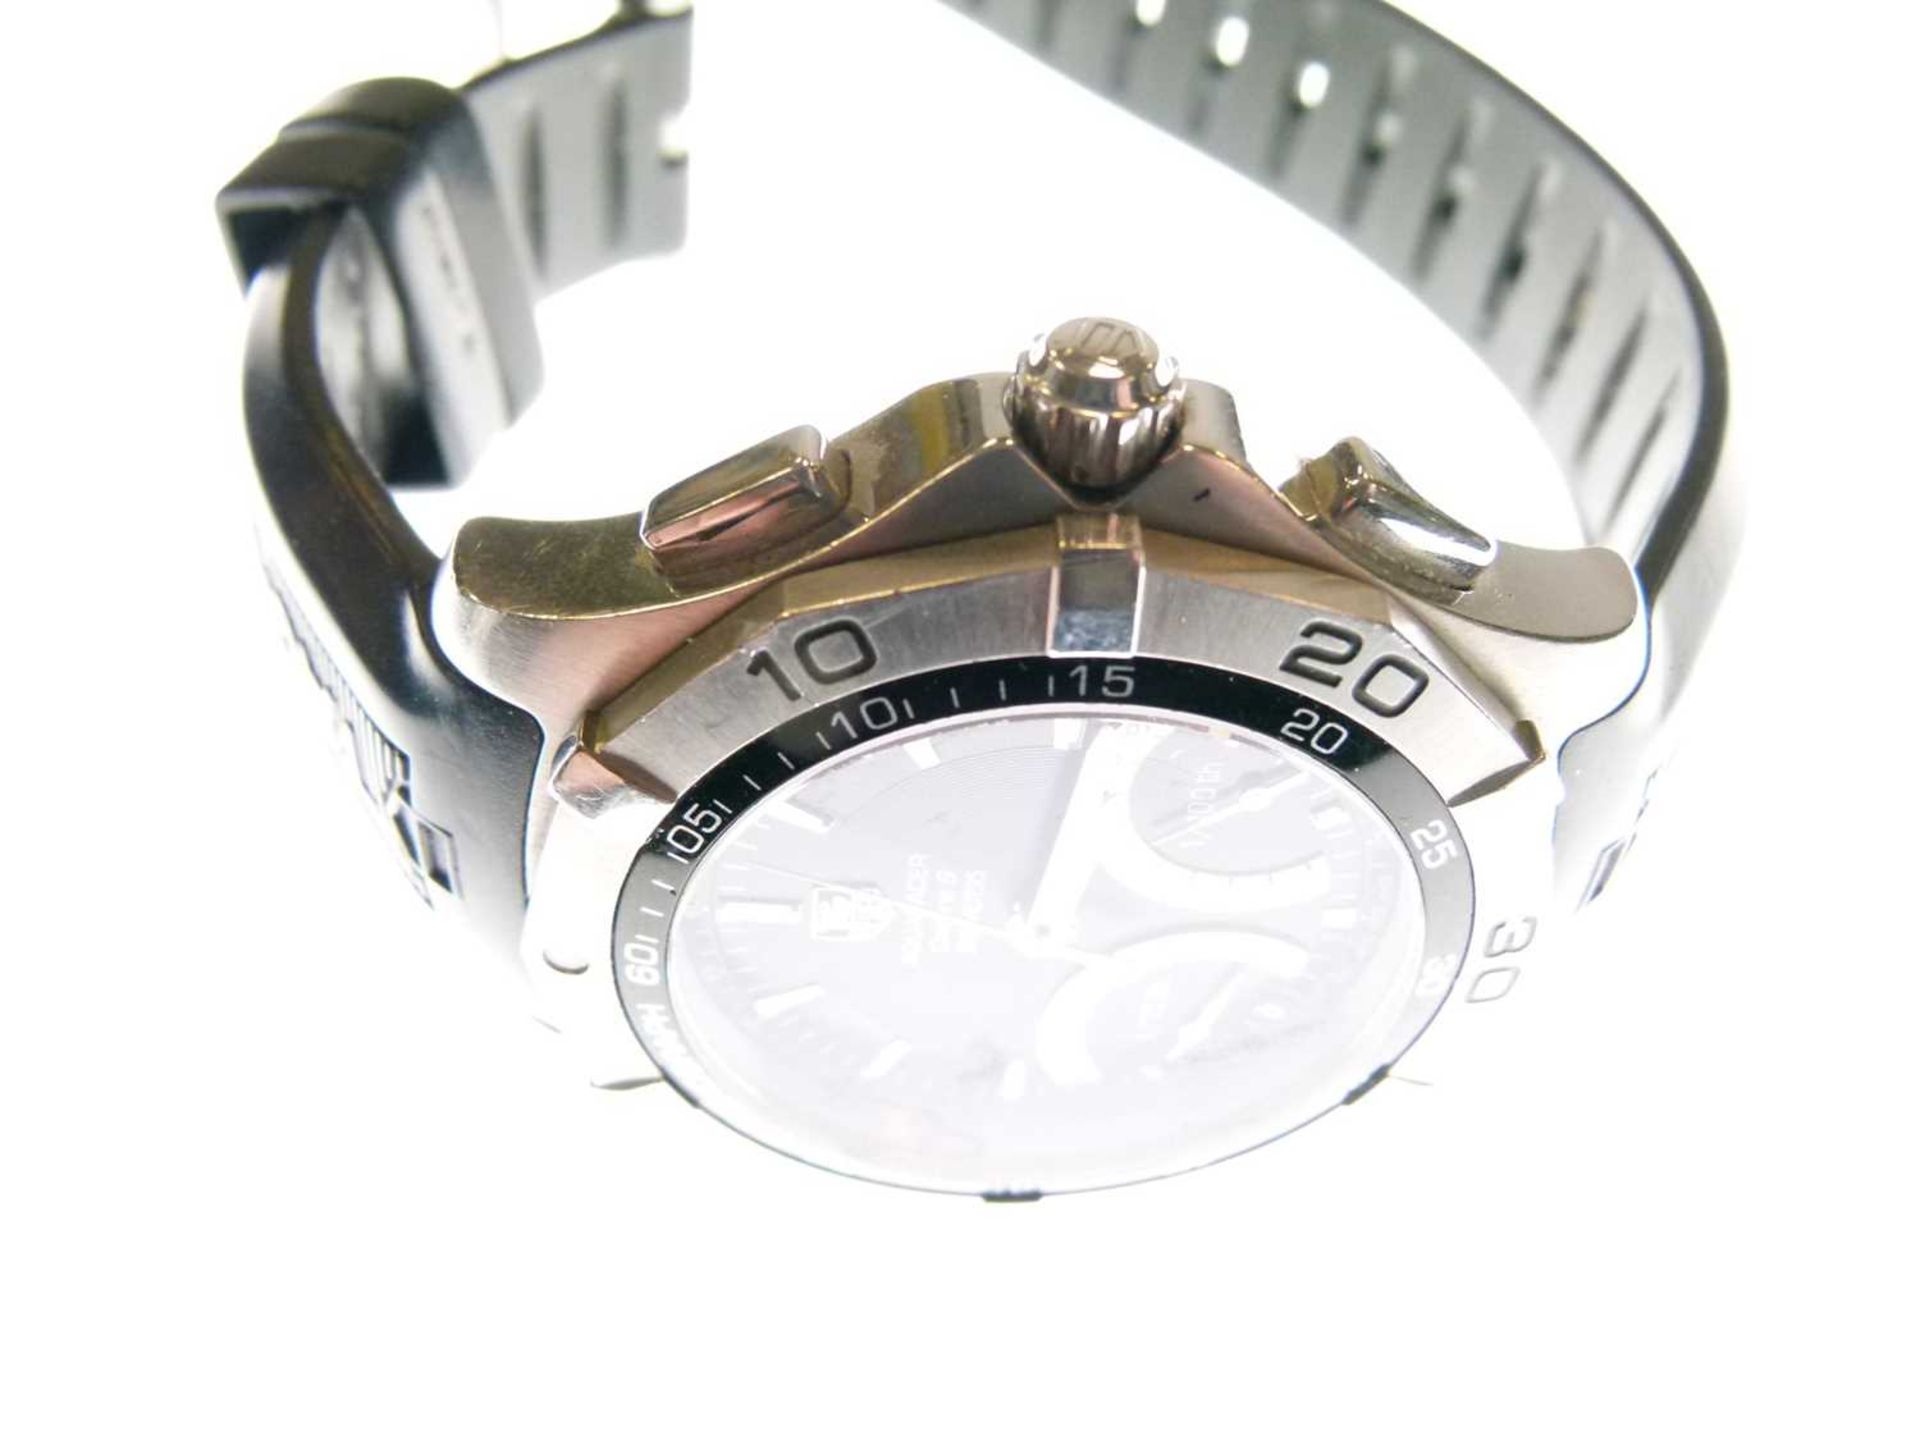 Tag Heuer - Gentleman's Aquaracer Calibre S Chronograph wristwatch - Image 4 of 6